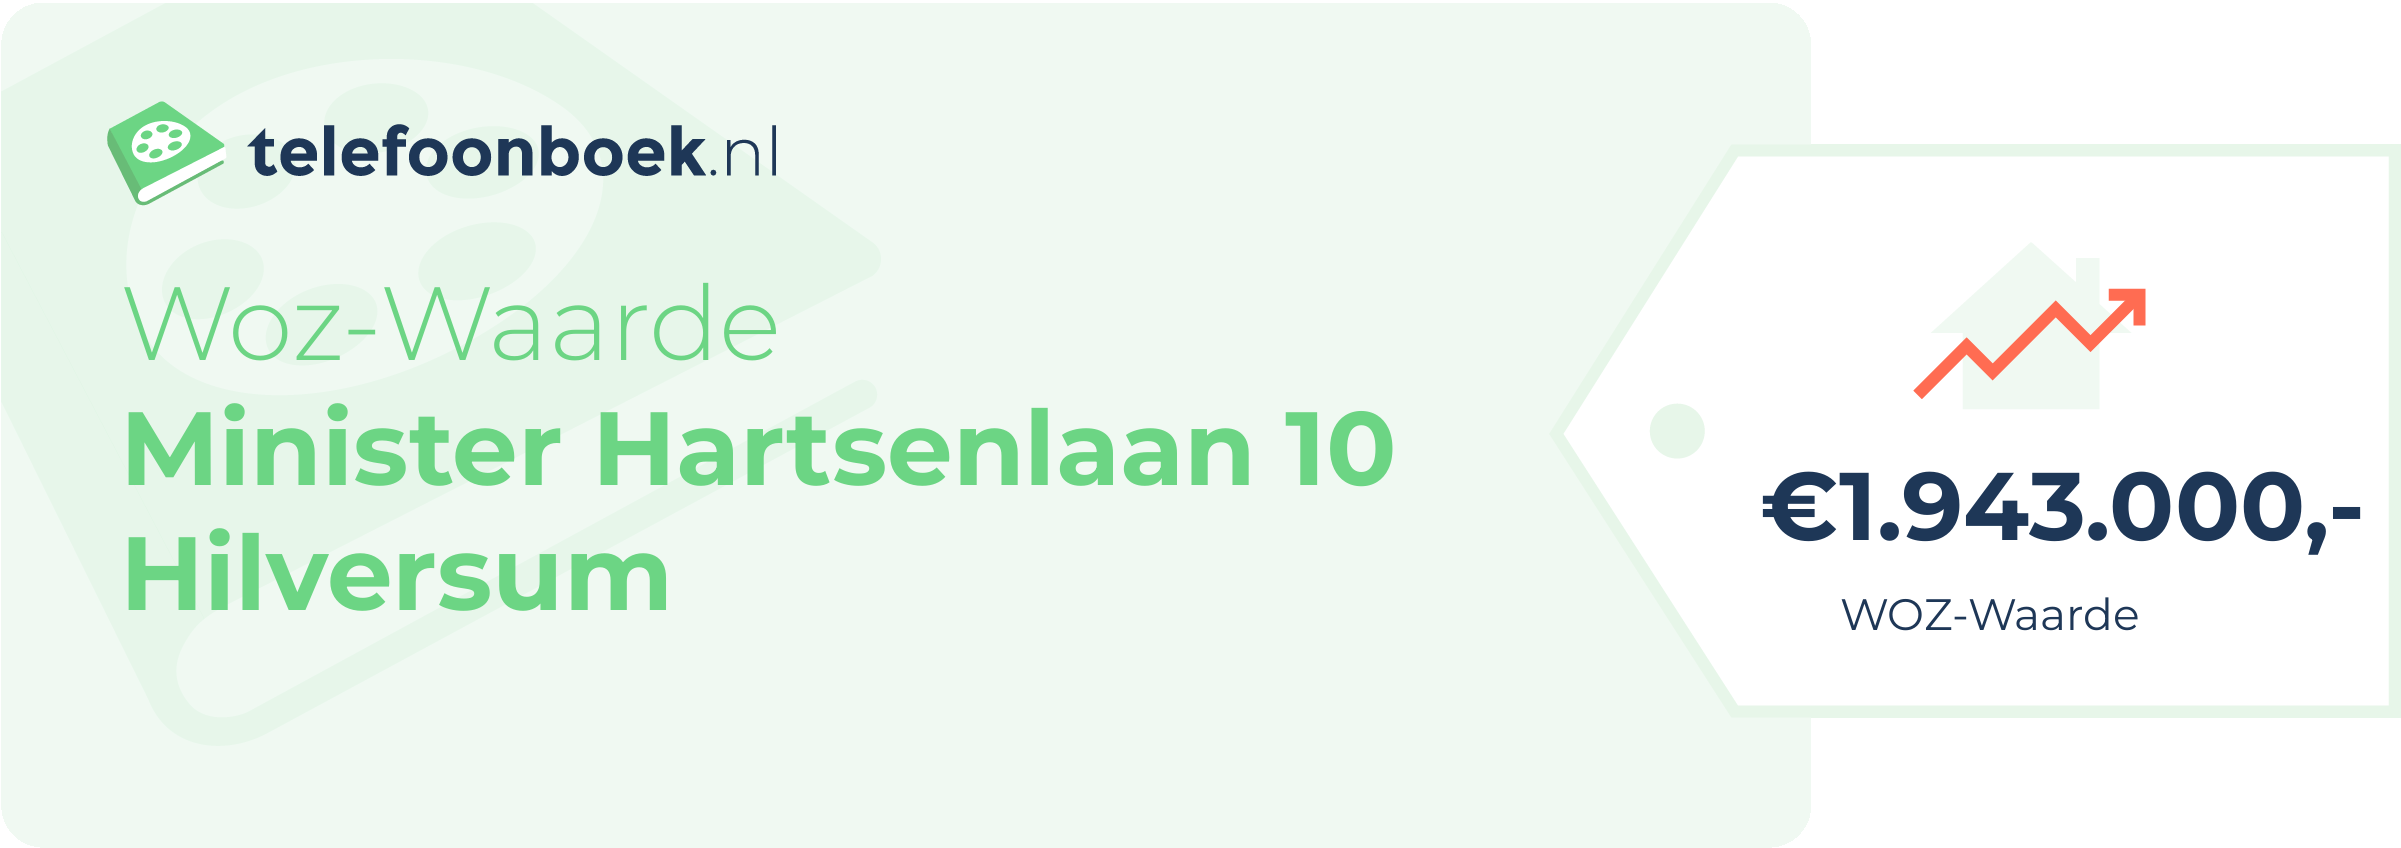 WOZ-waarde Minister Hartsenlaan 10 Hilversum